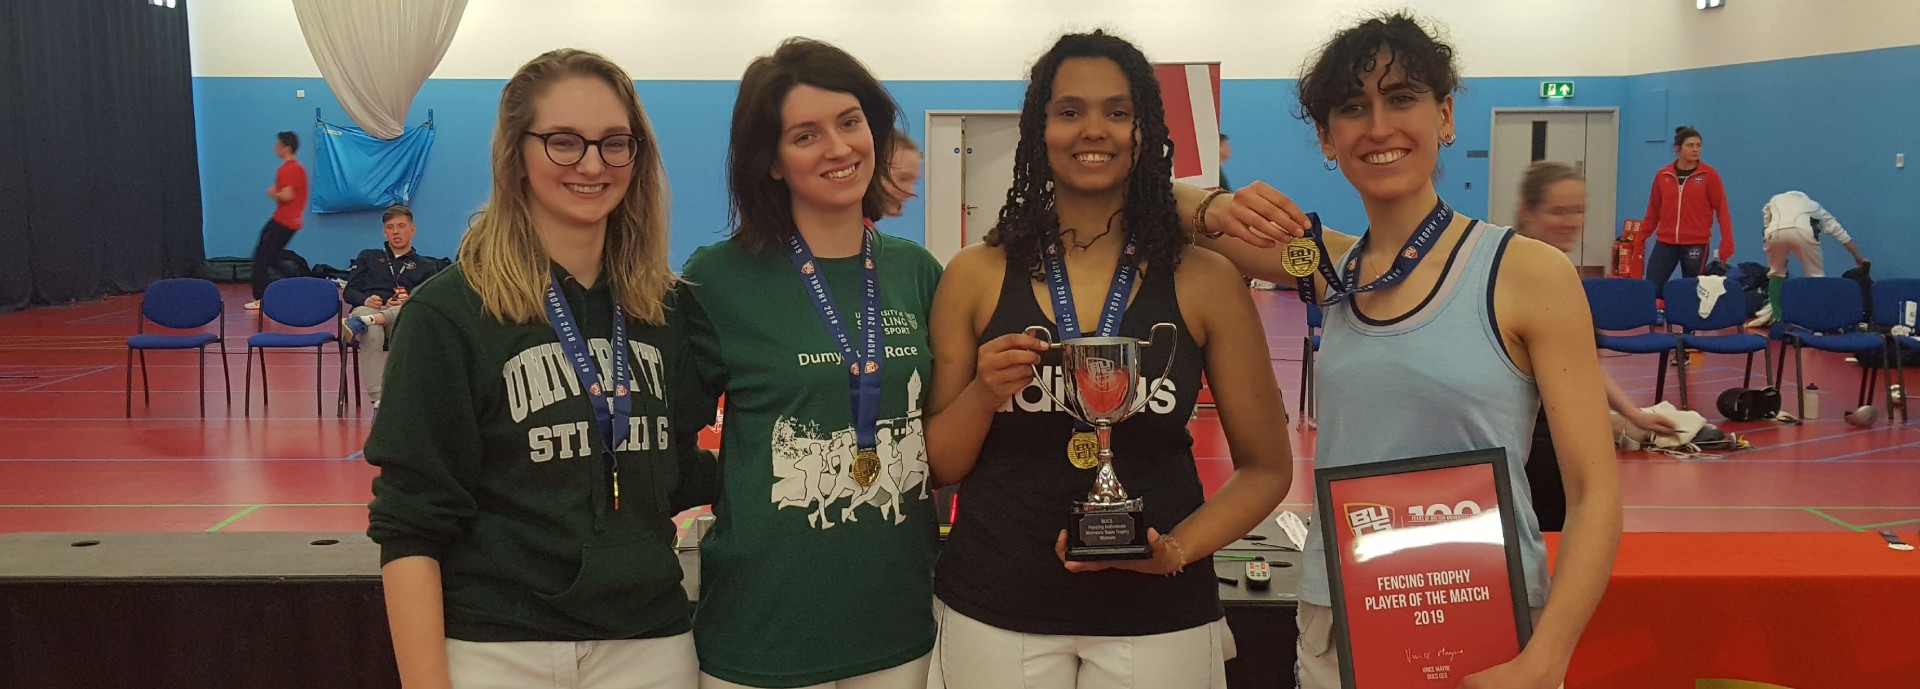 Women's fencing team with BUCS trophy